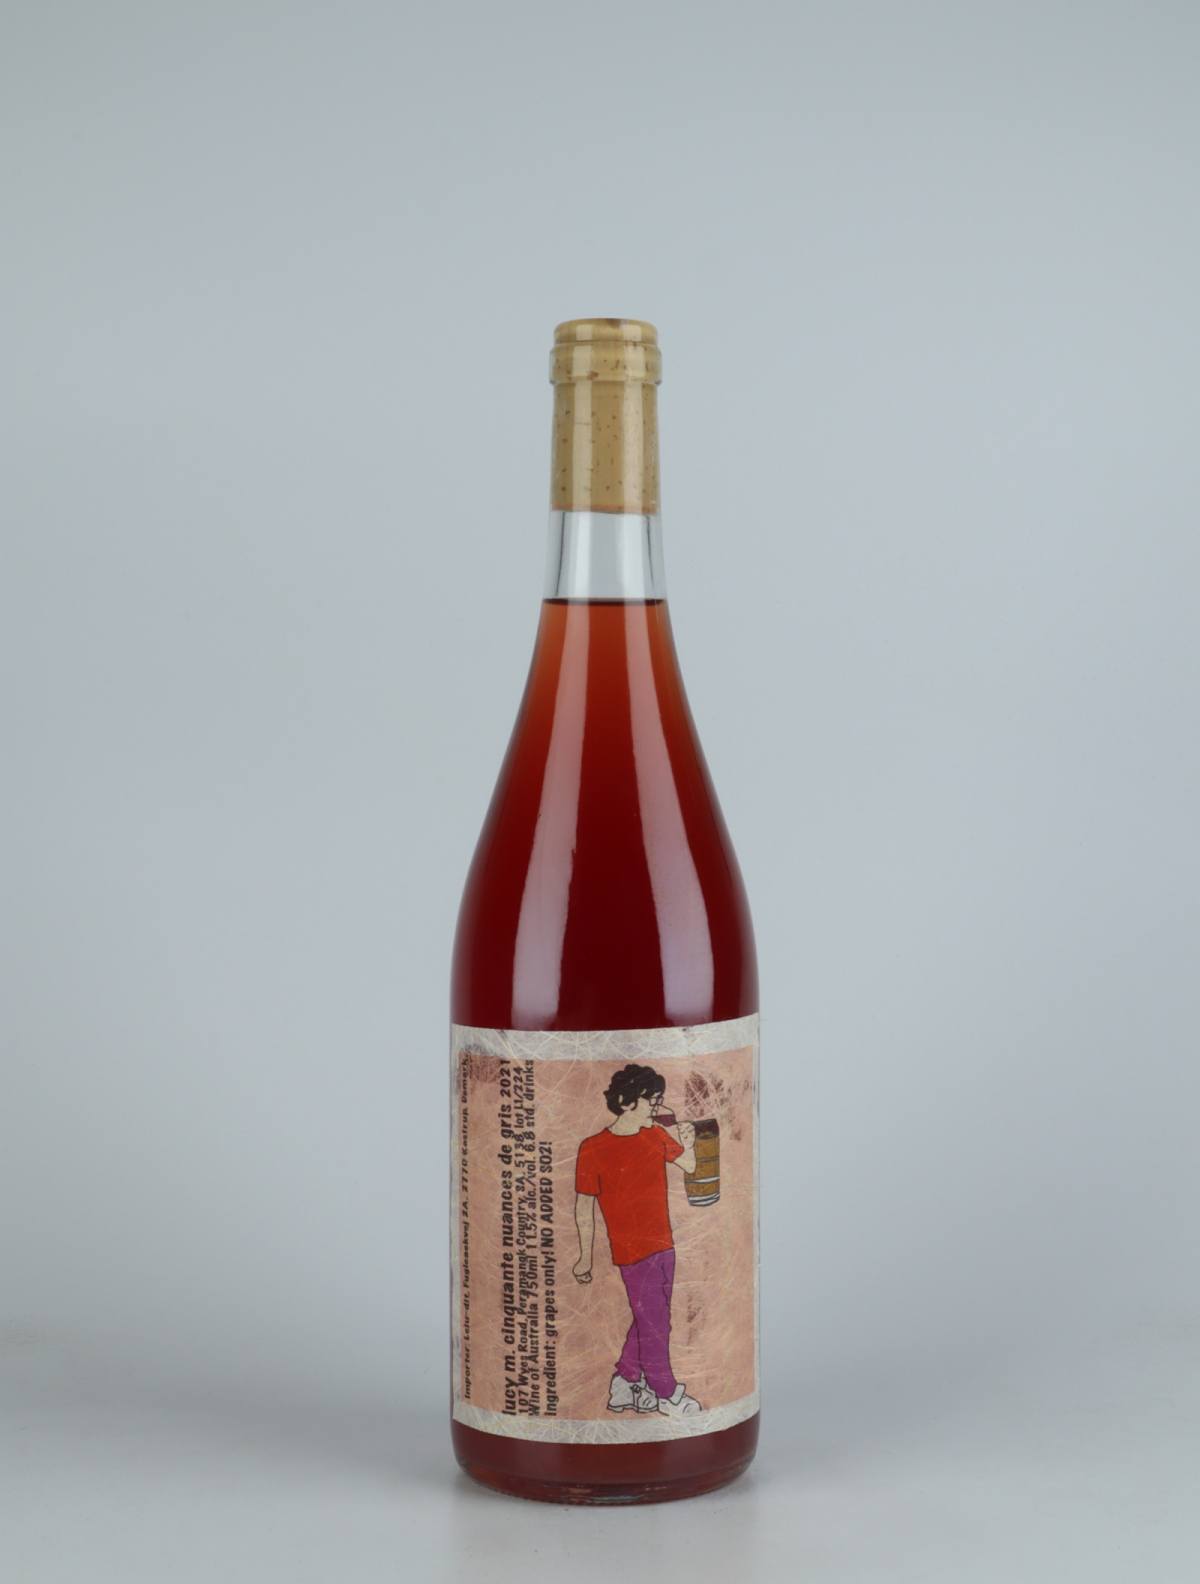 A bottle 2021 Cinquante Nuances de Gris Orange wine from Lucy Margaux, Adelaide Hills in Australia